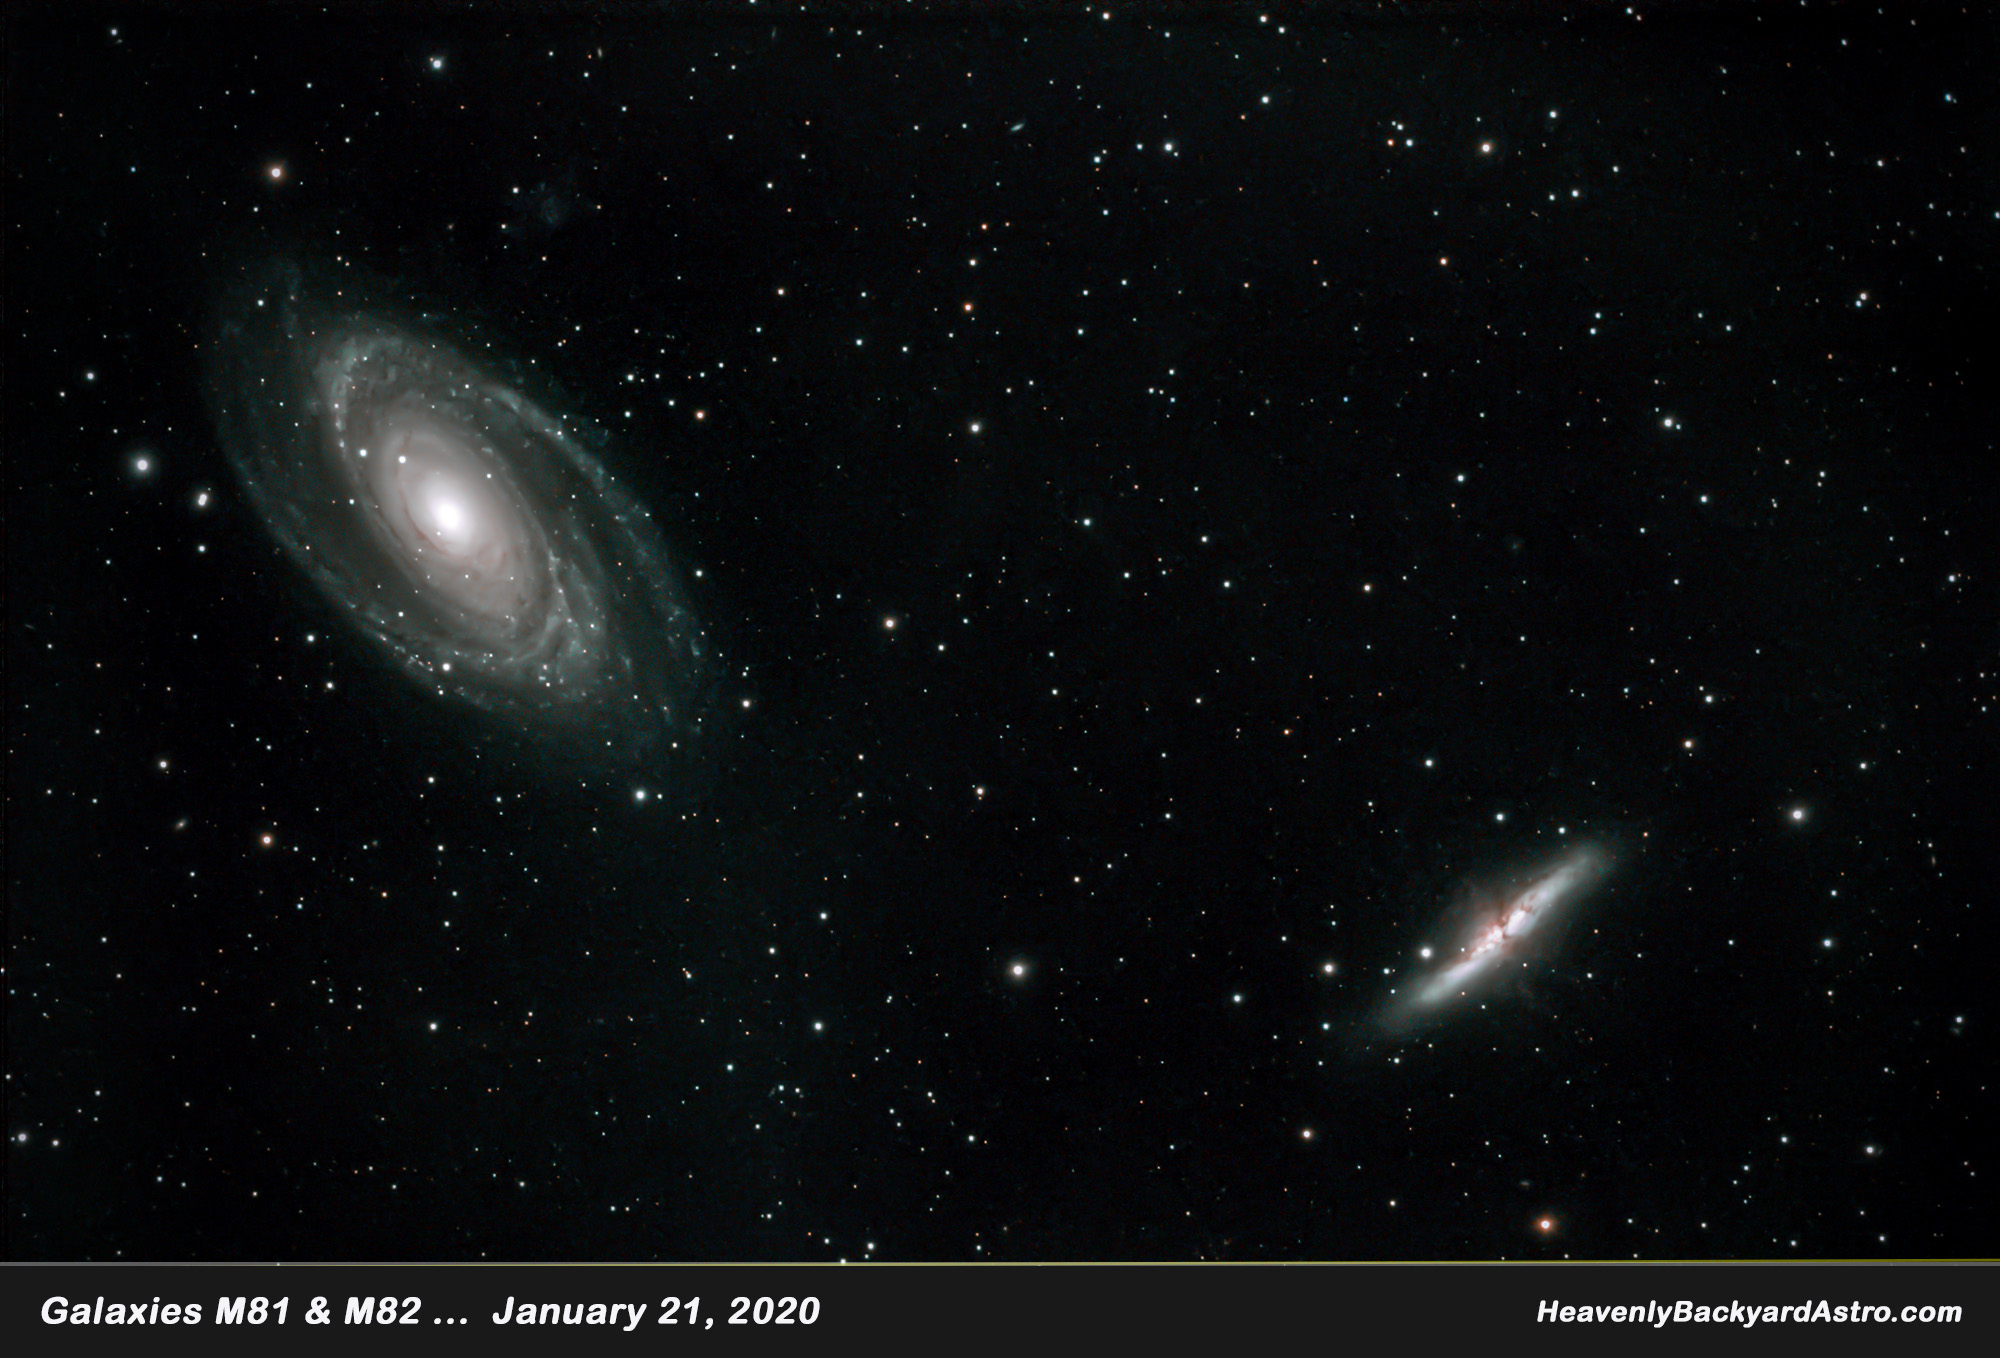 Galaxies M81 & M82, January 21, 2020